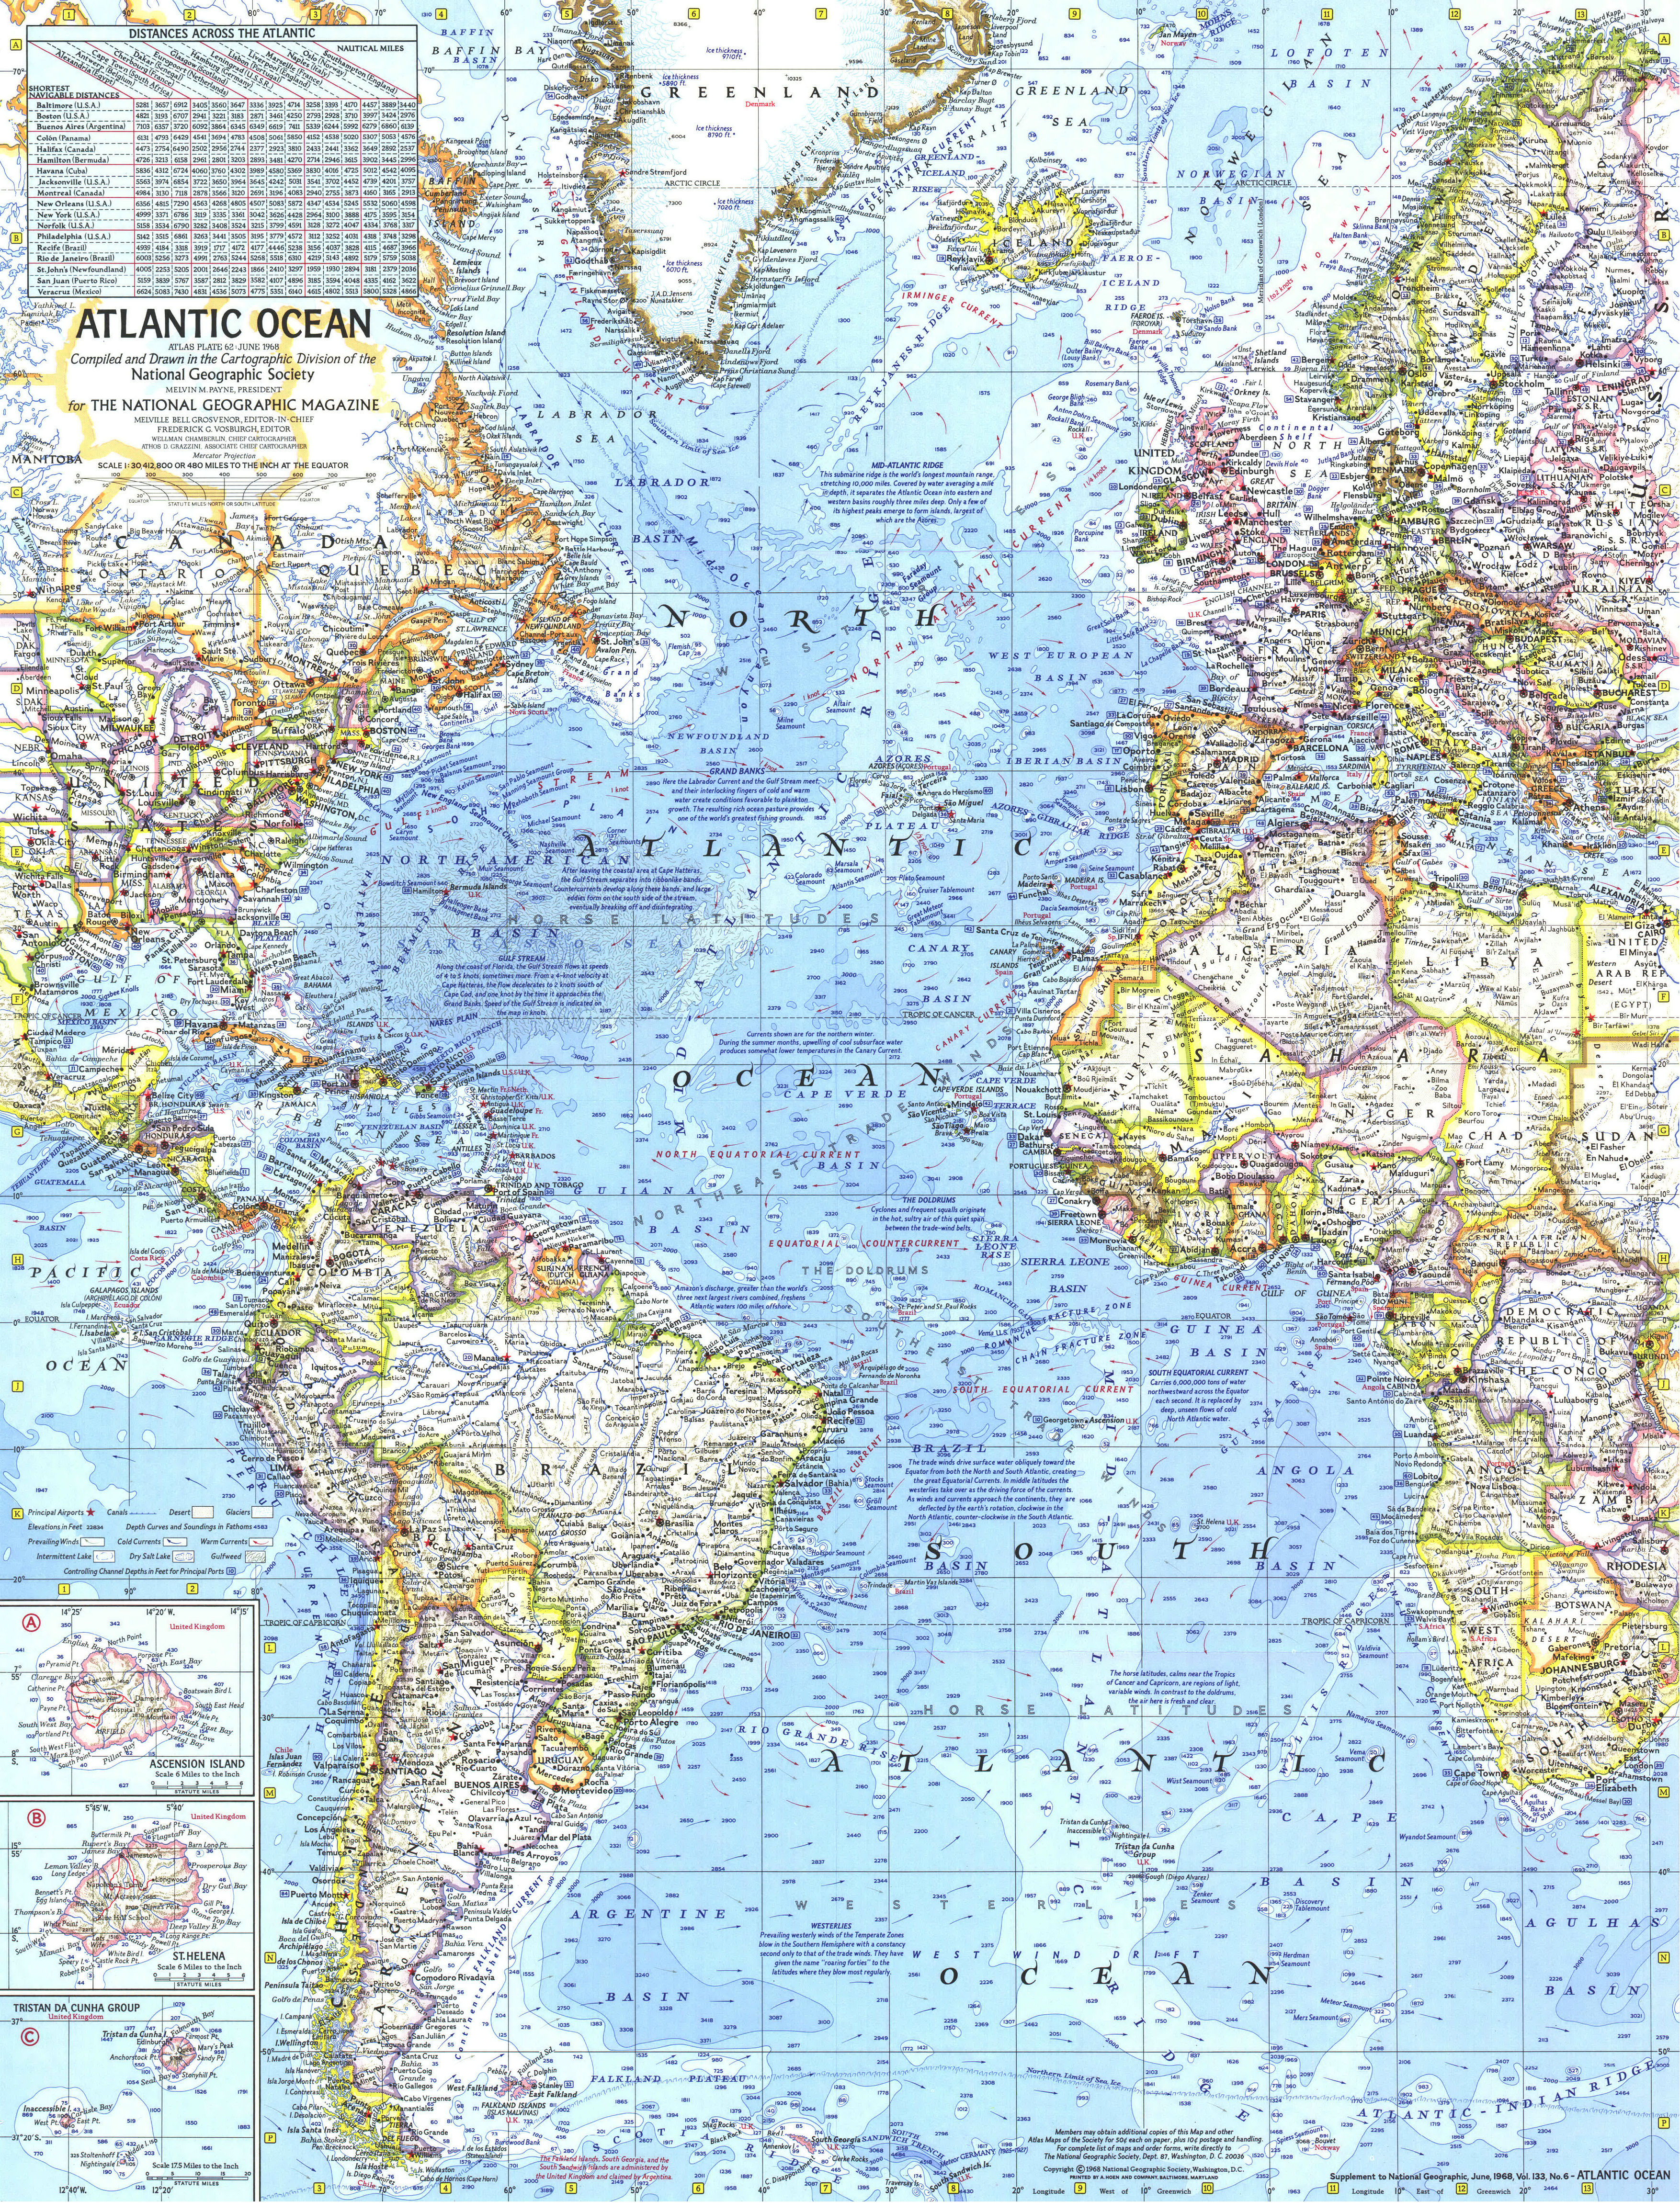 National Geografic - Mapy - Atlantic Ocean 1968.jpg